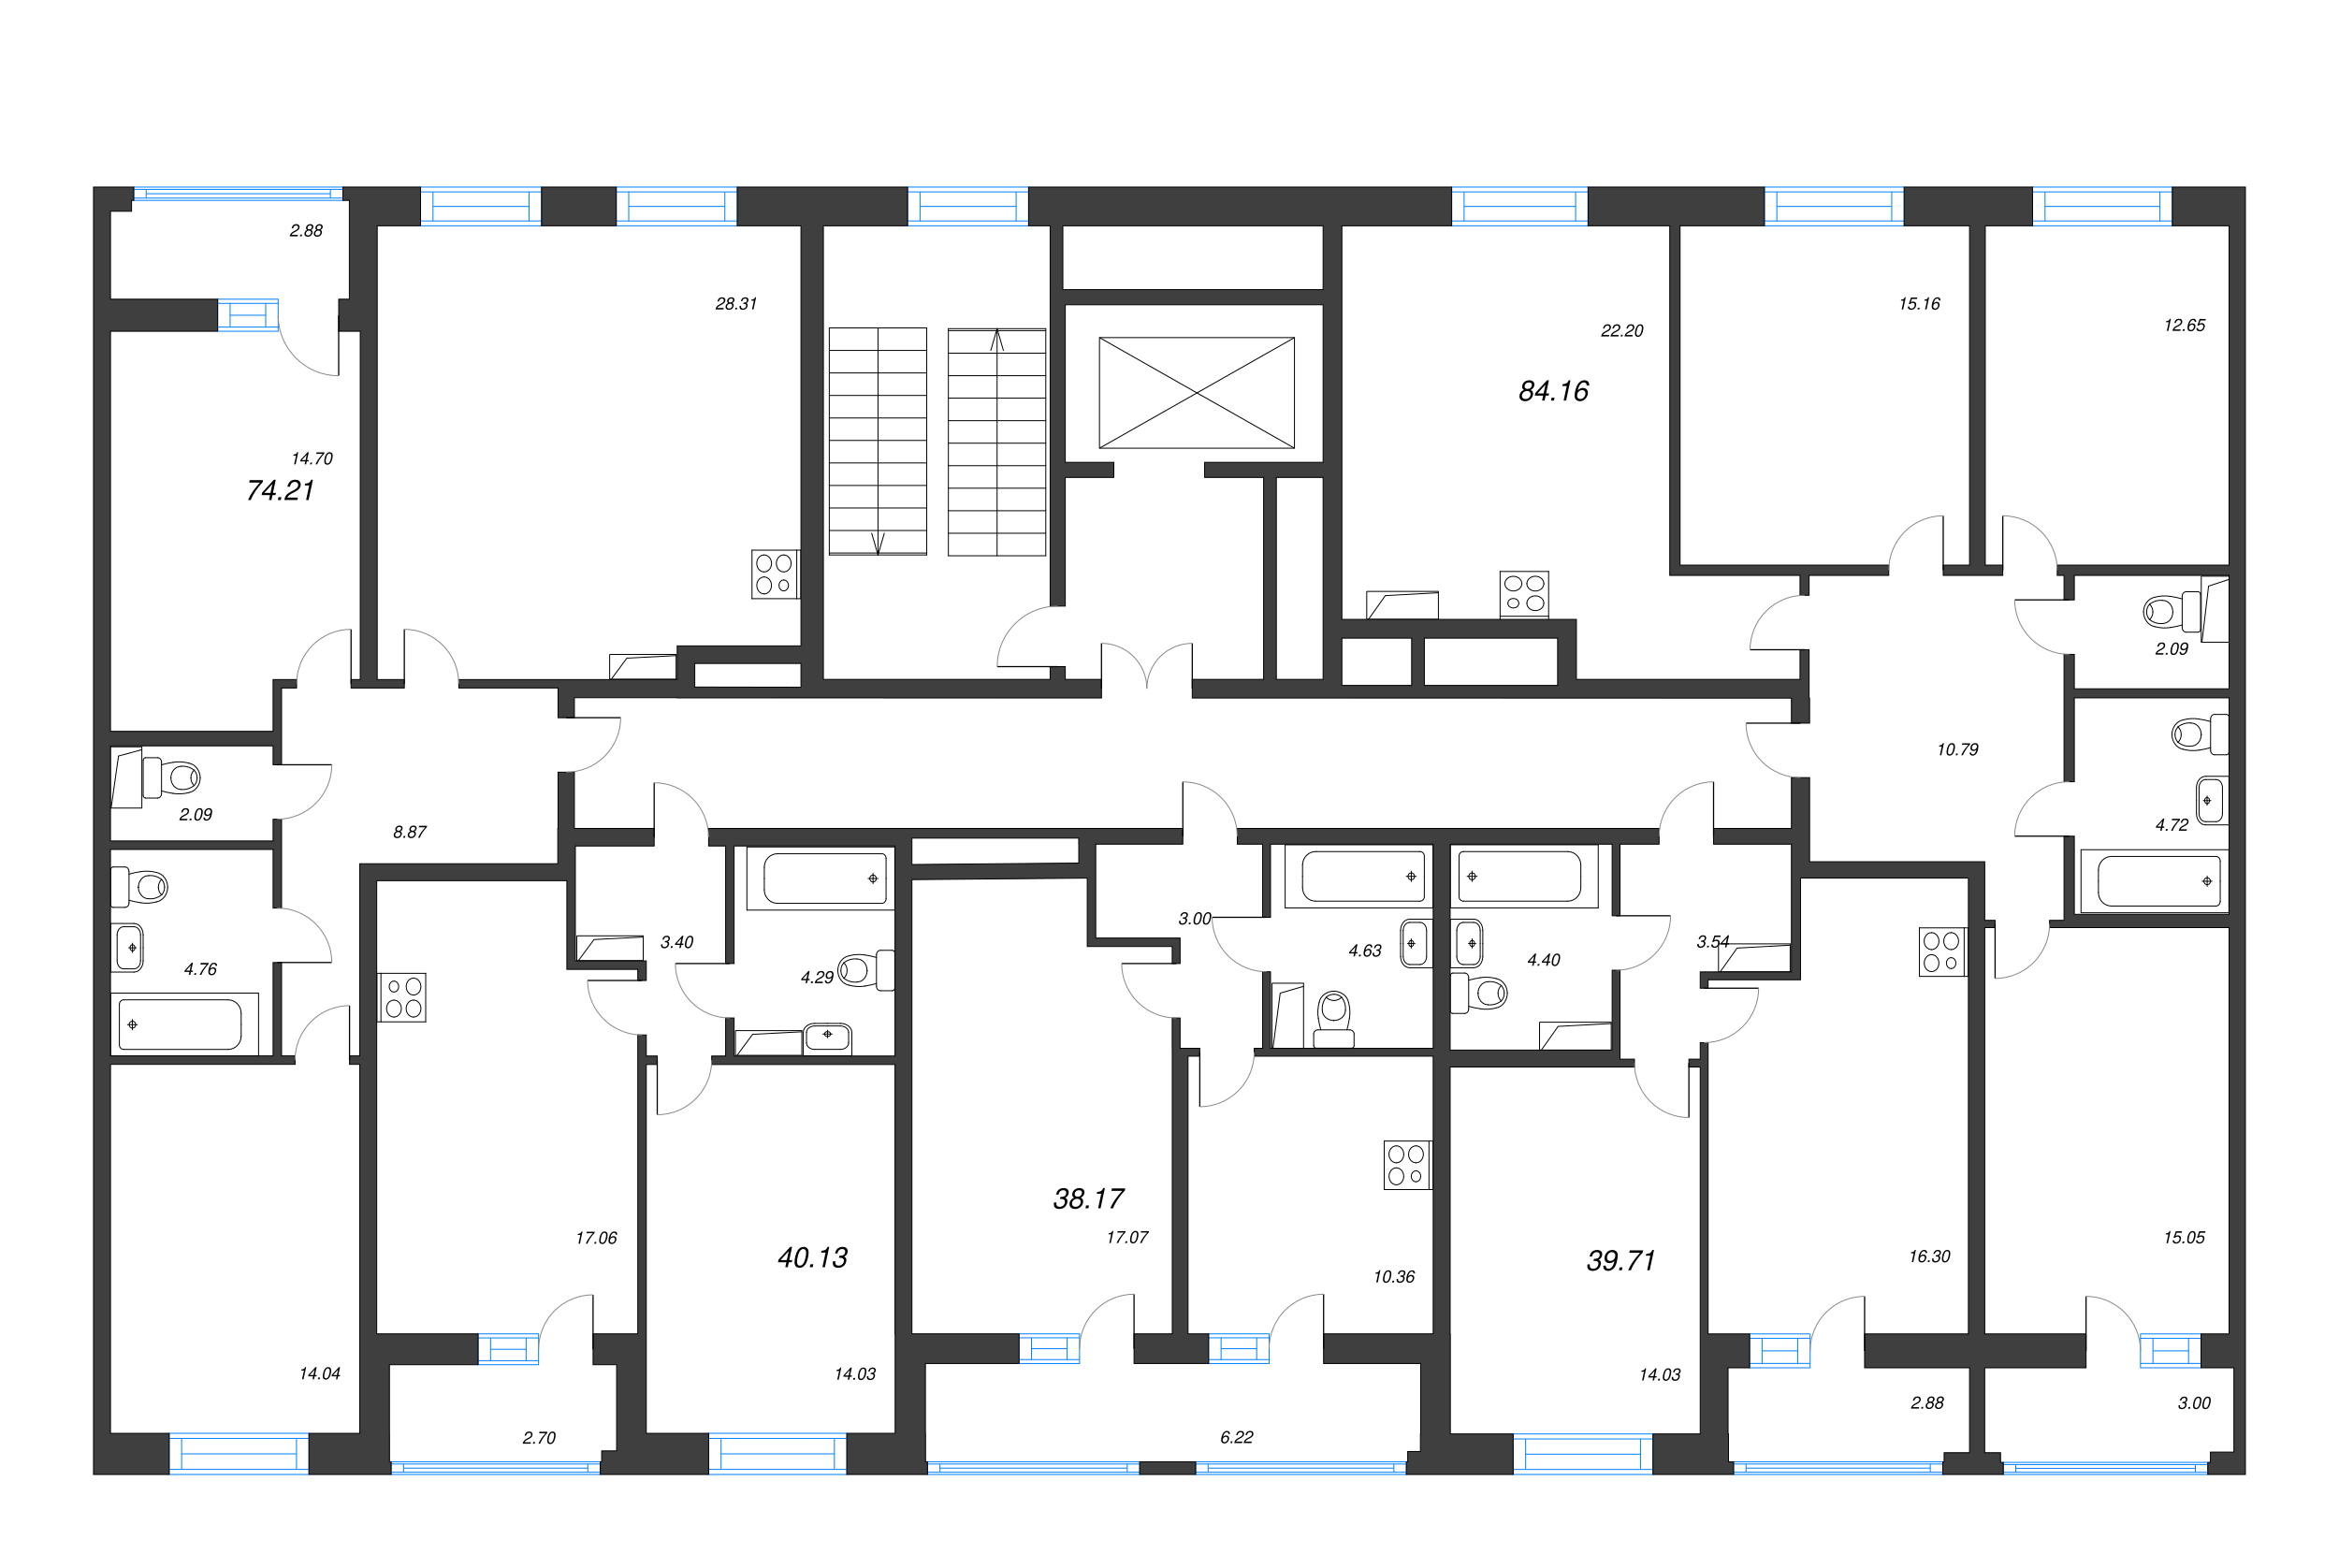 2-комнатная (Евро) квартира, 39.71 м² - планировка этажа